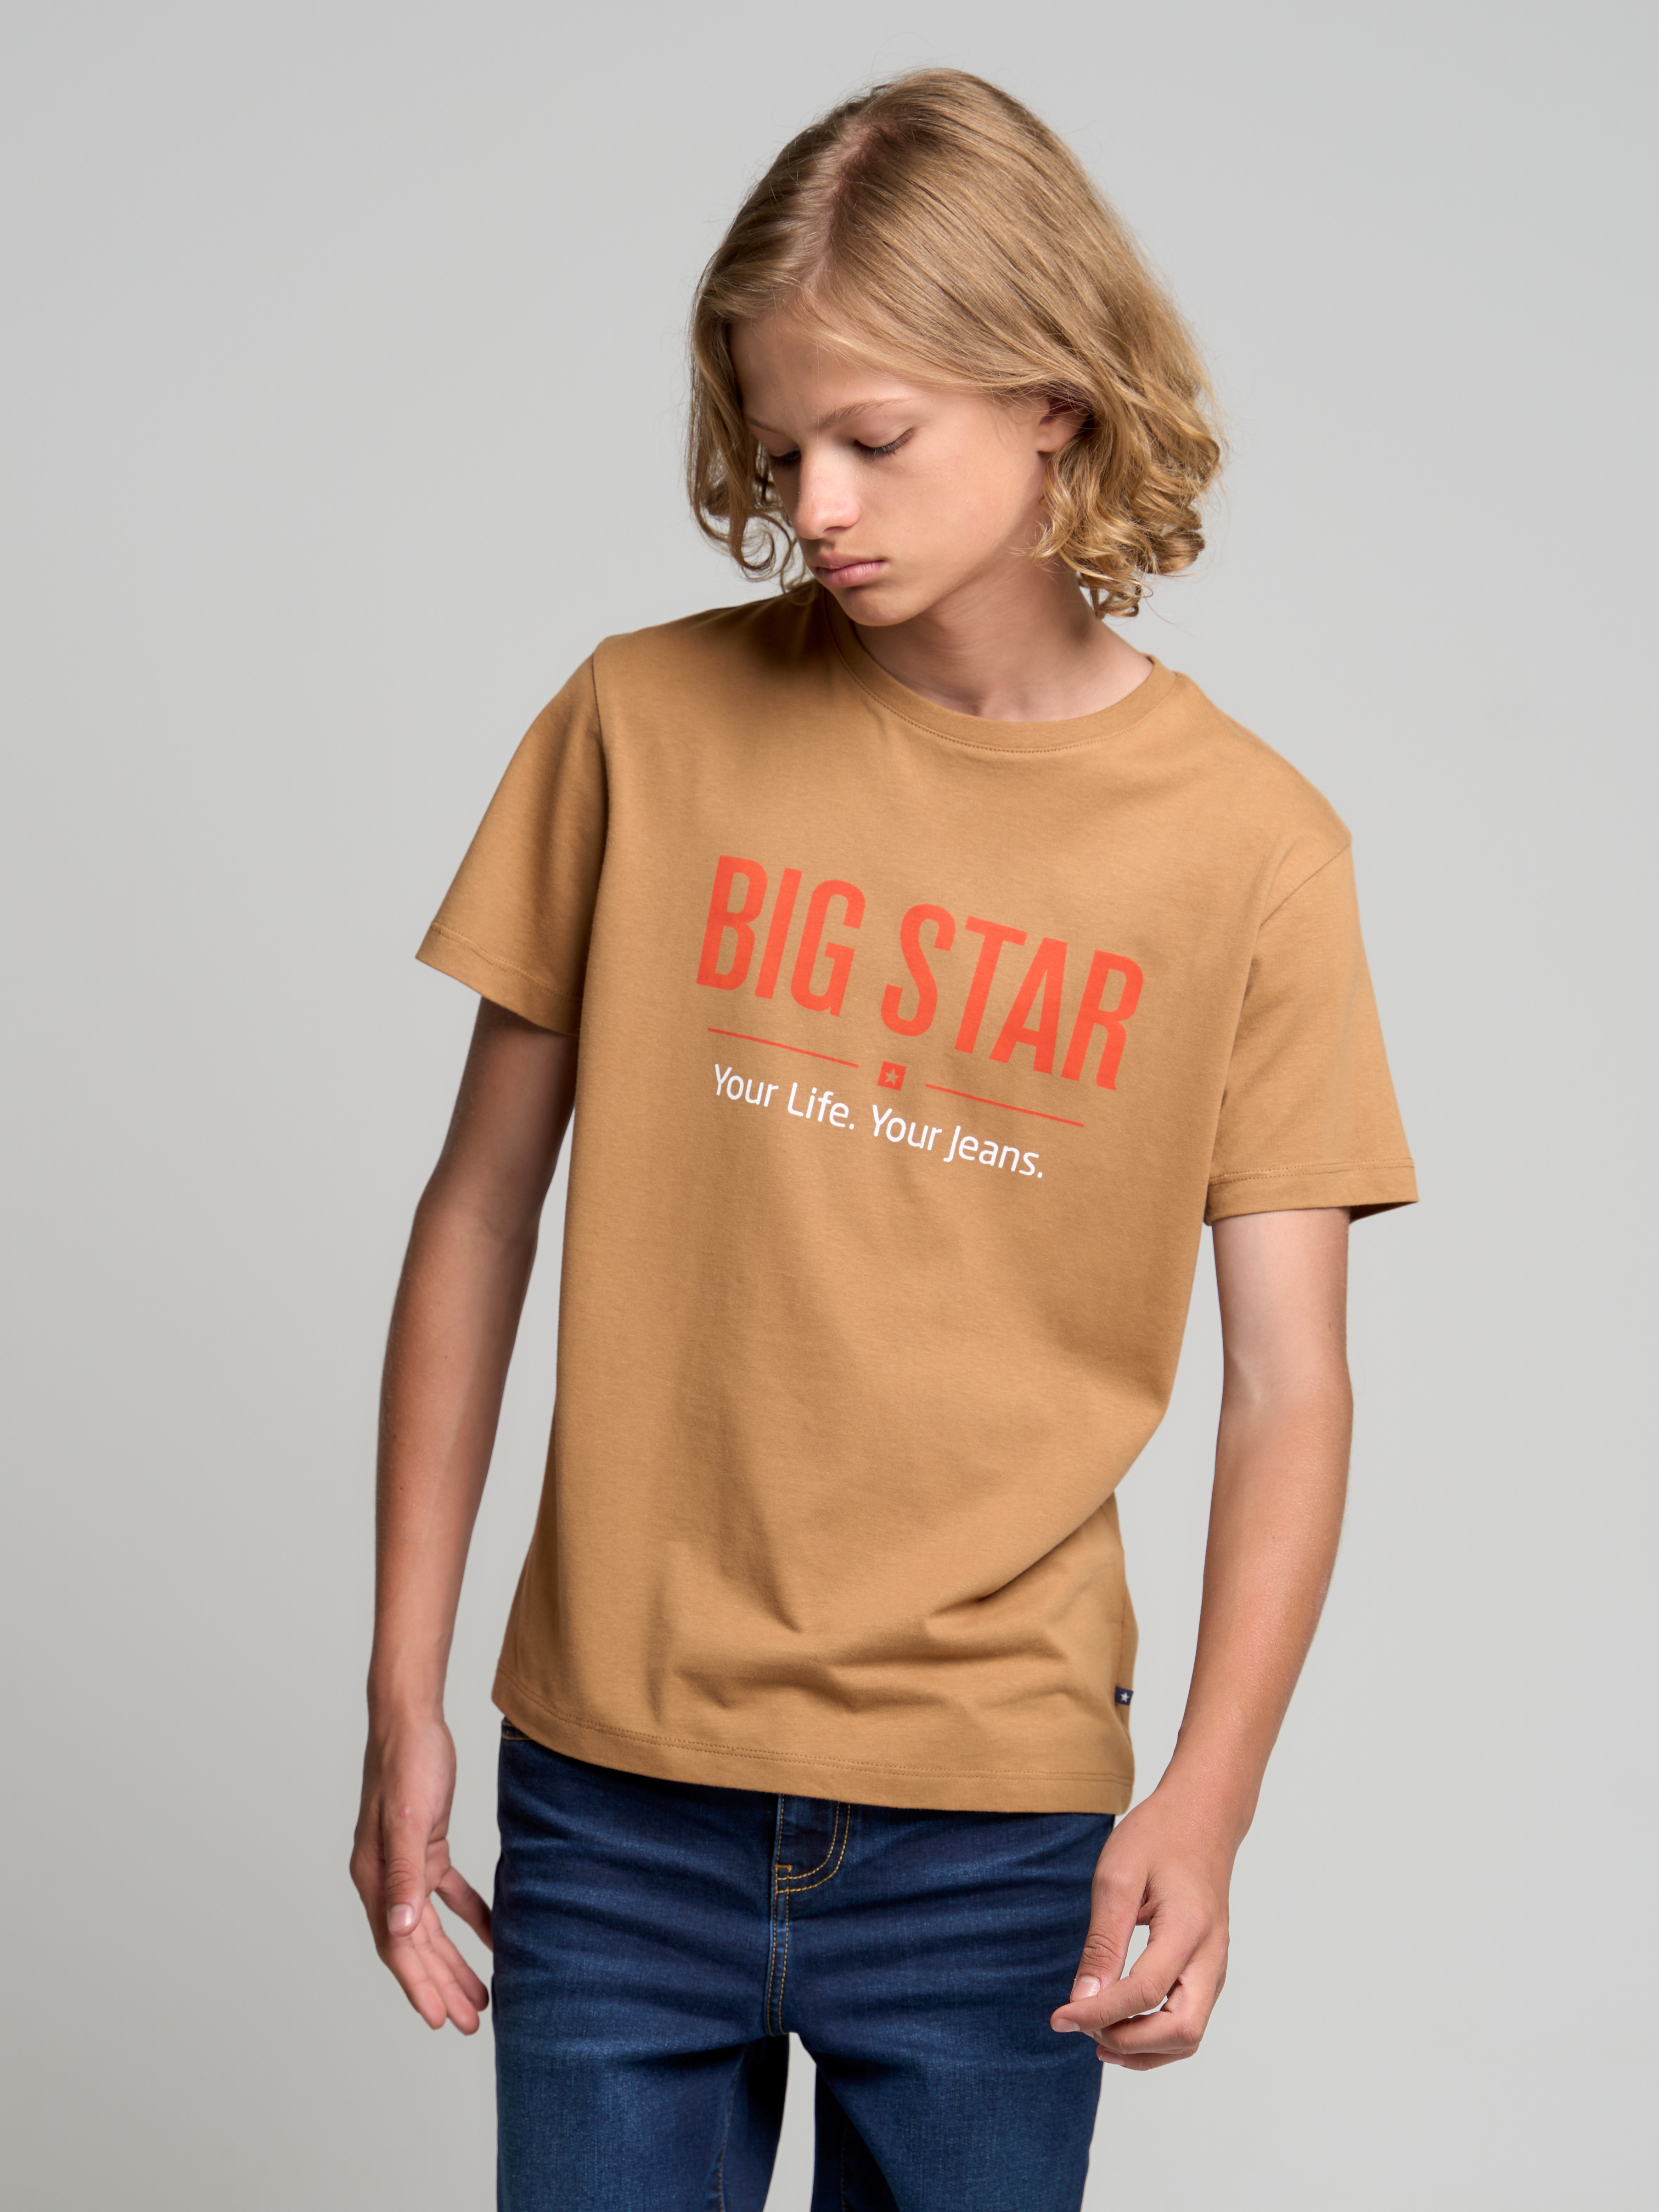 Big Star Man's T-shirt 152058-802